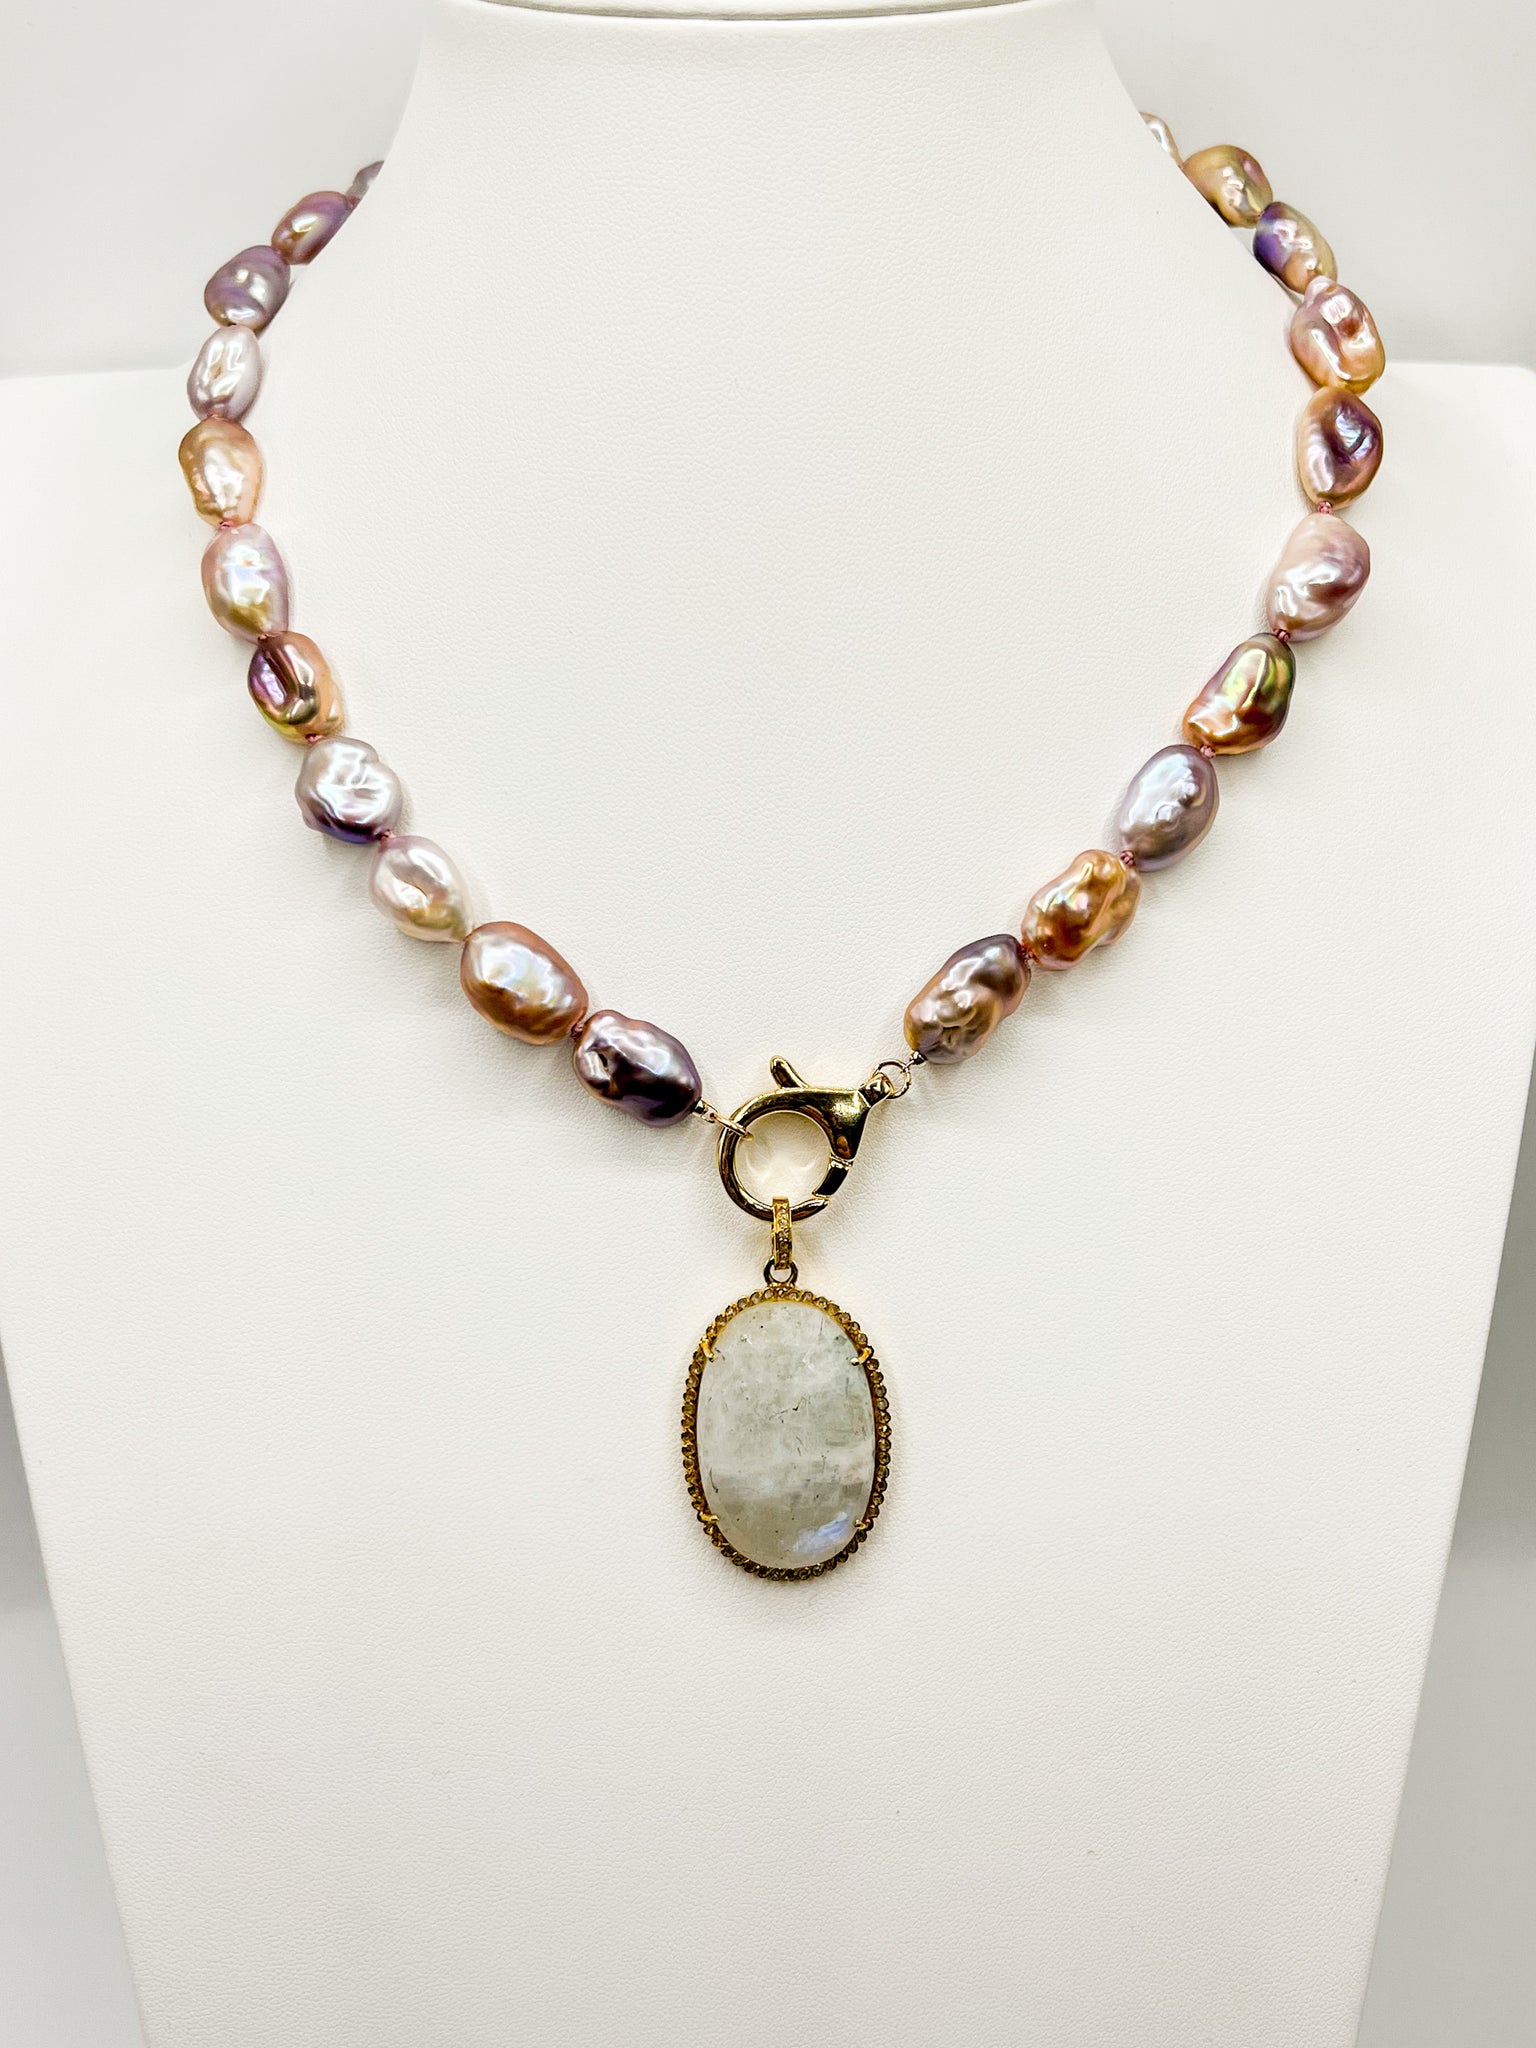 The Anjuna necklace